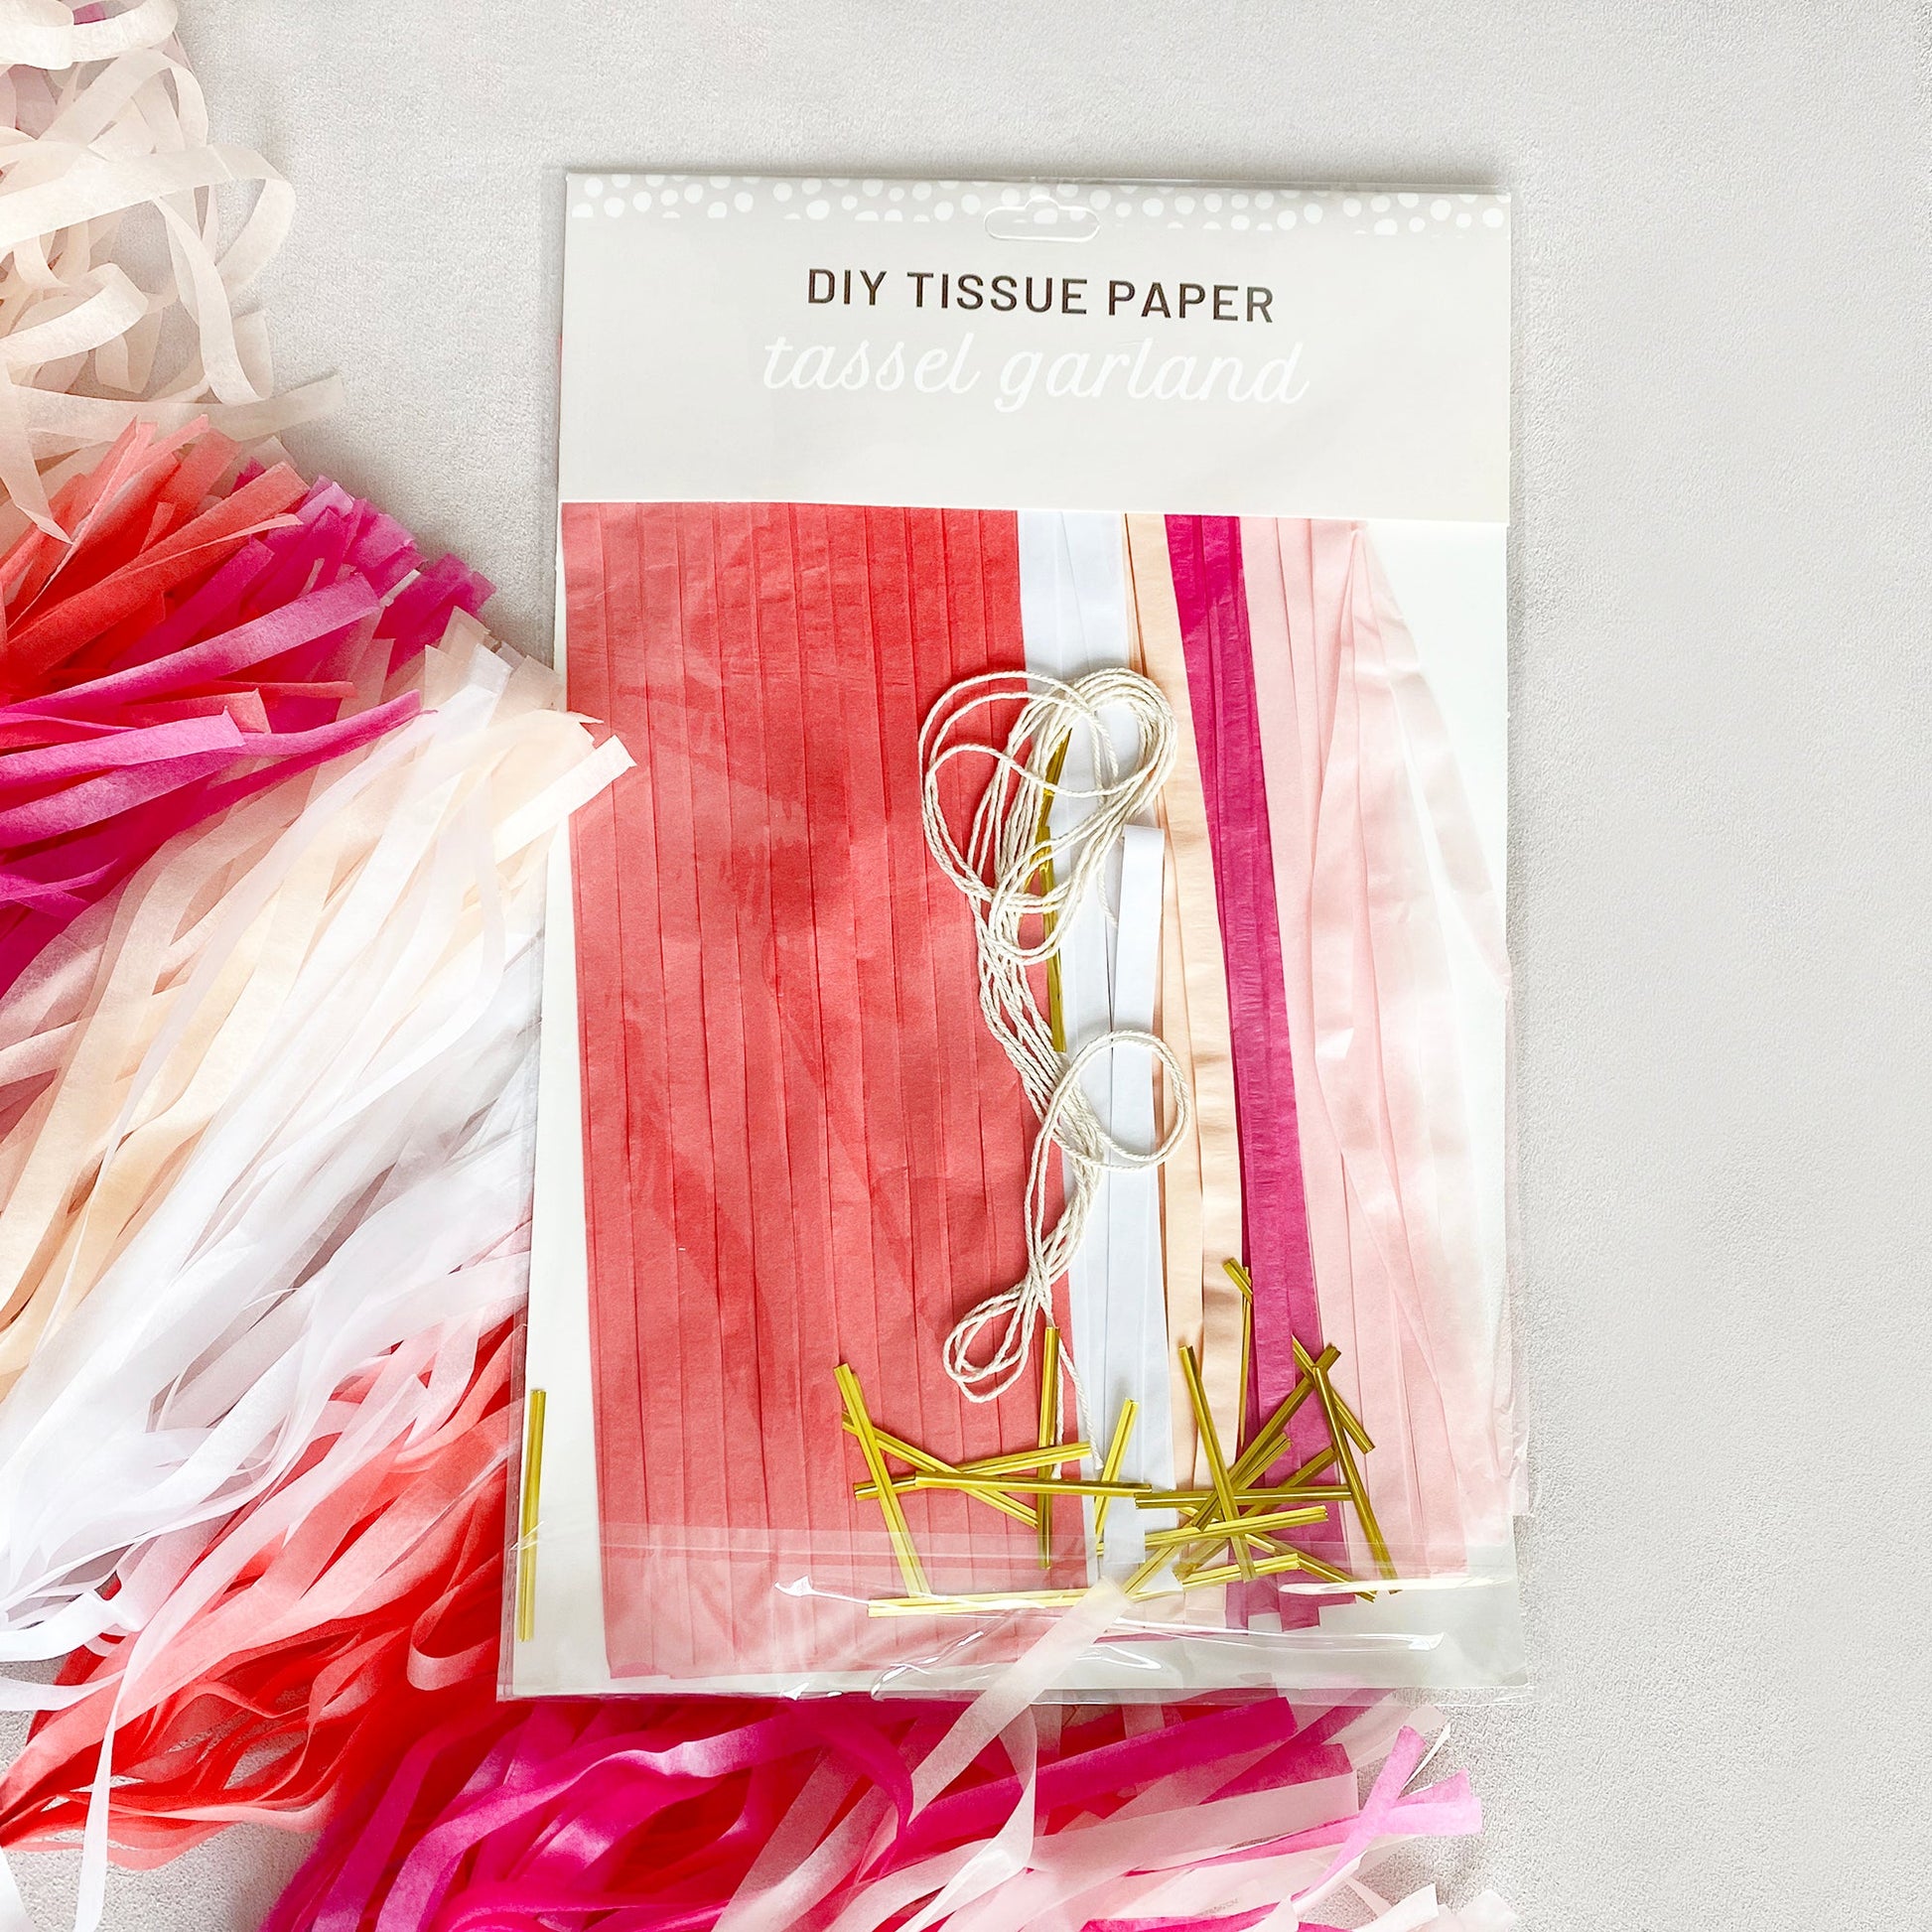 Balloon Tissue Tassel Tail Fringe Kit in Pinks, Peach and Gold